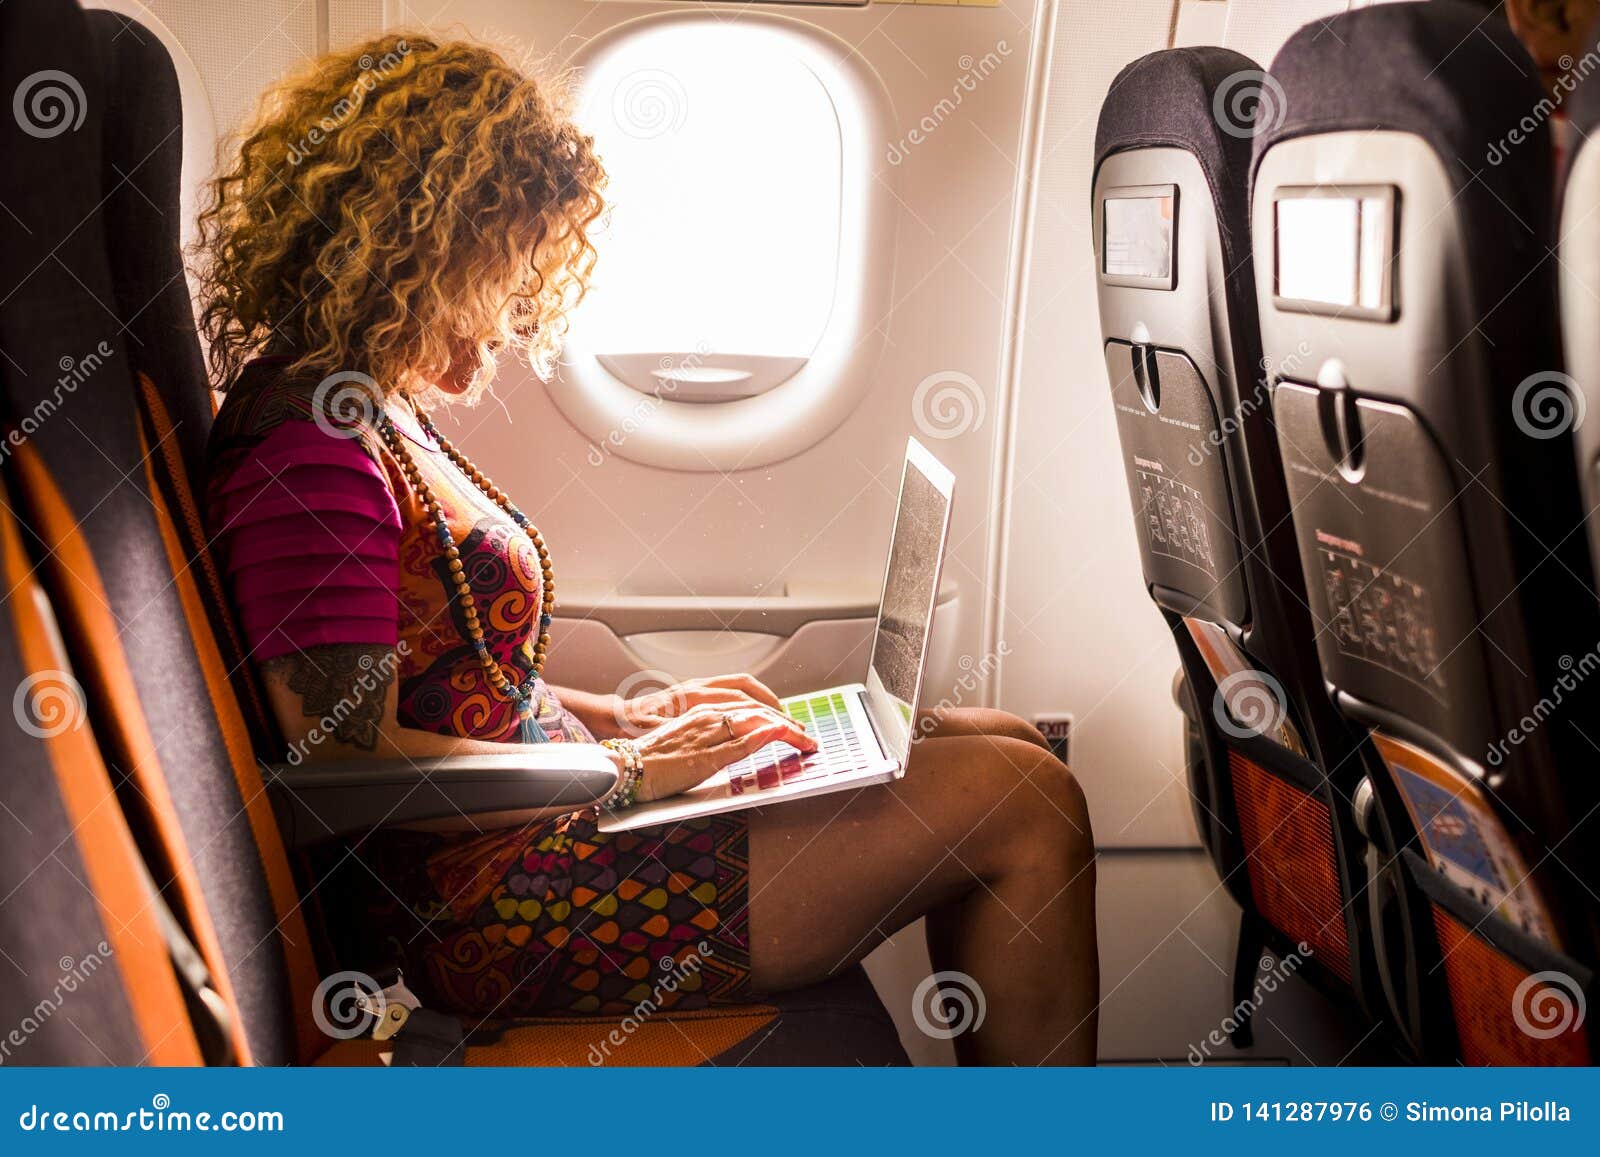 computer airplane travel